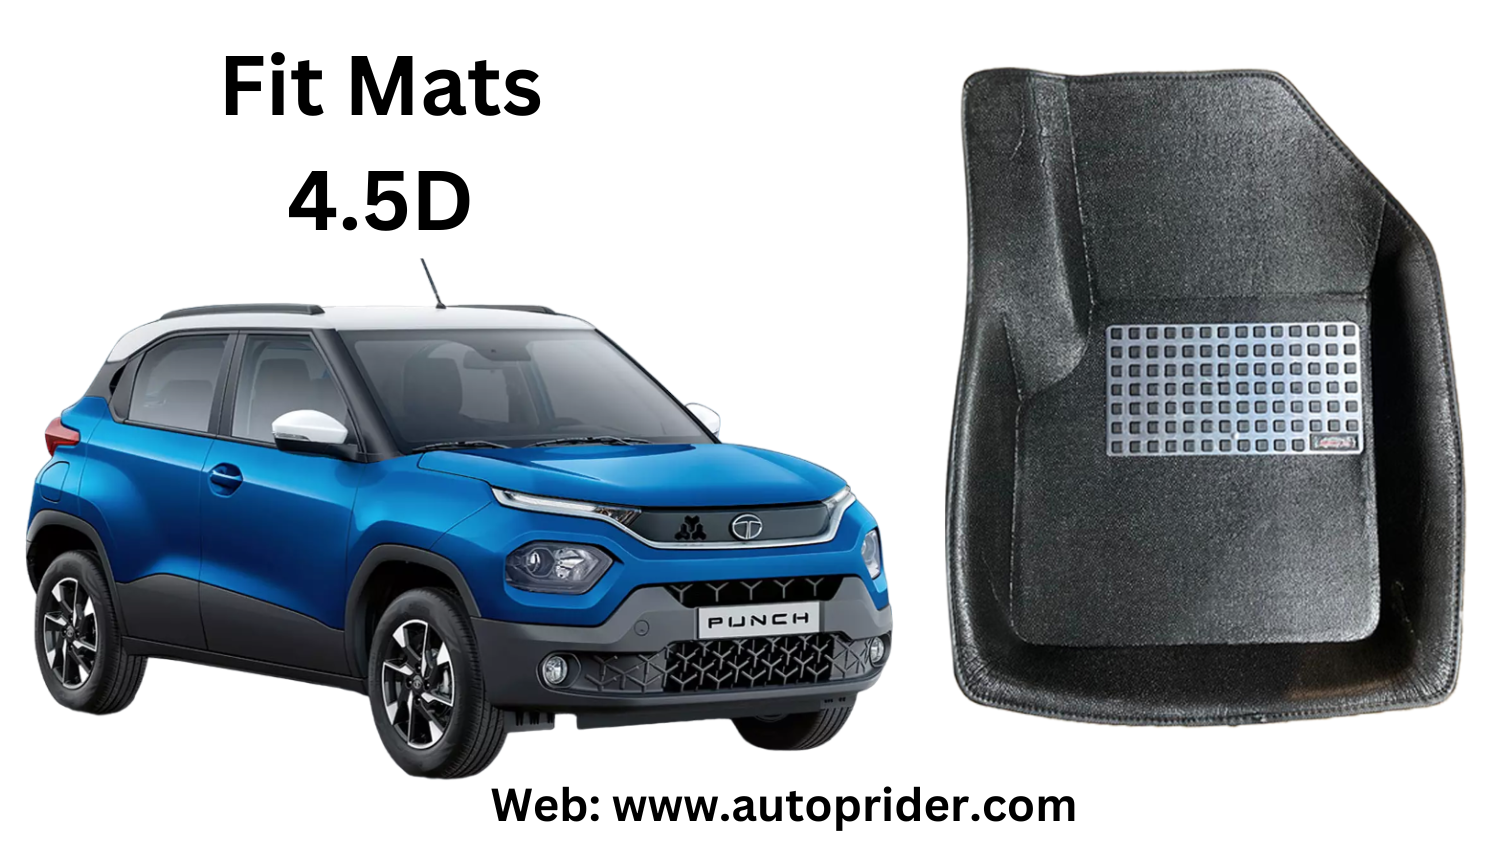 Autoprider | Fit Mats 4.5D Economy Car Mats for Tata Punch